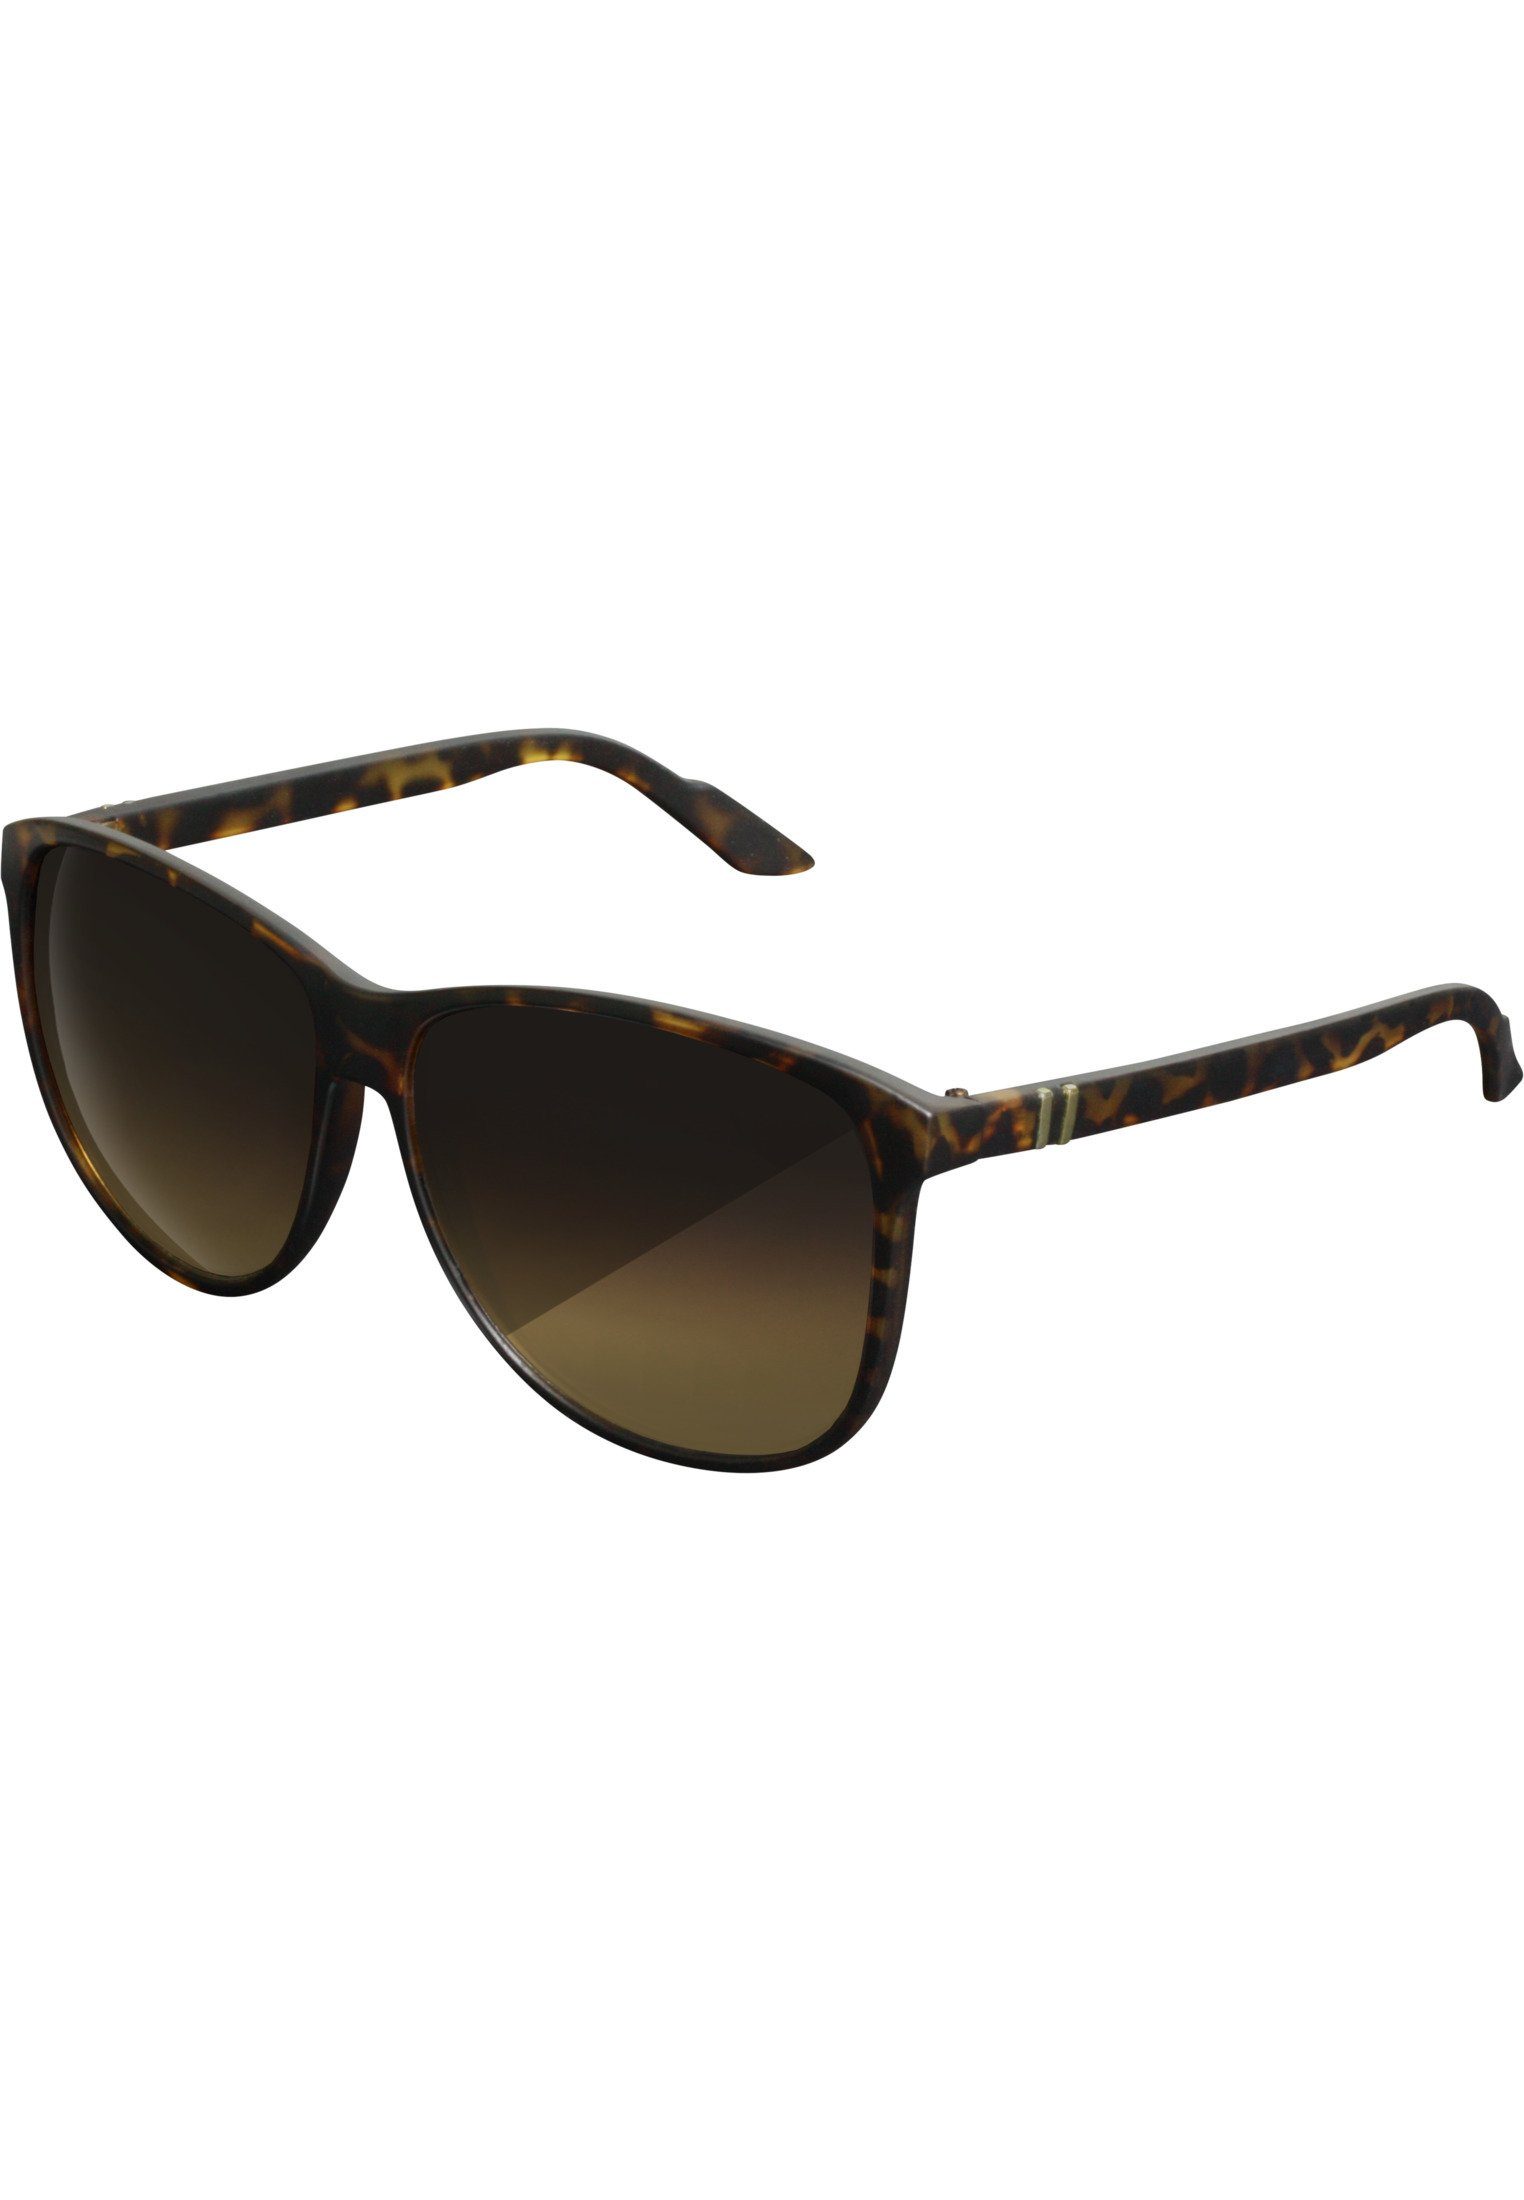 MSTRDS Sonnenbrille Accessoires Sunglasses Chirwa amber